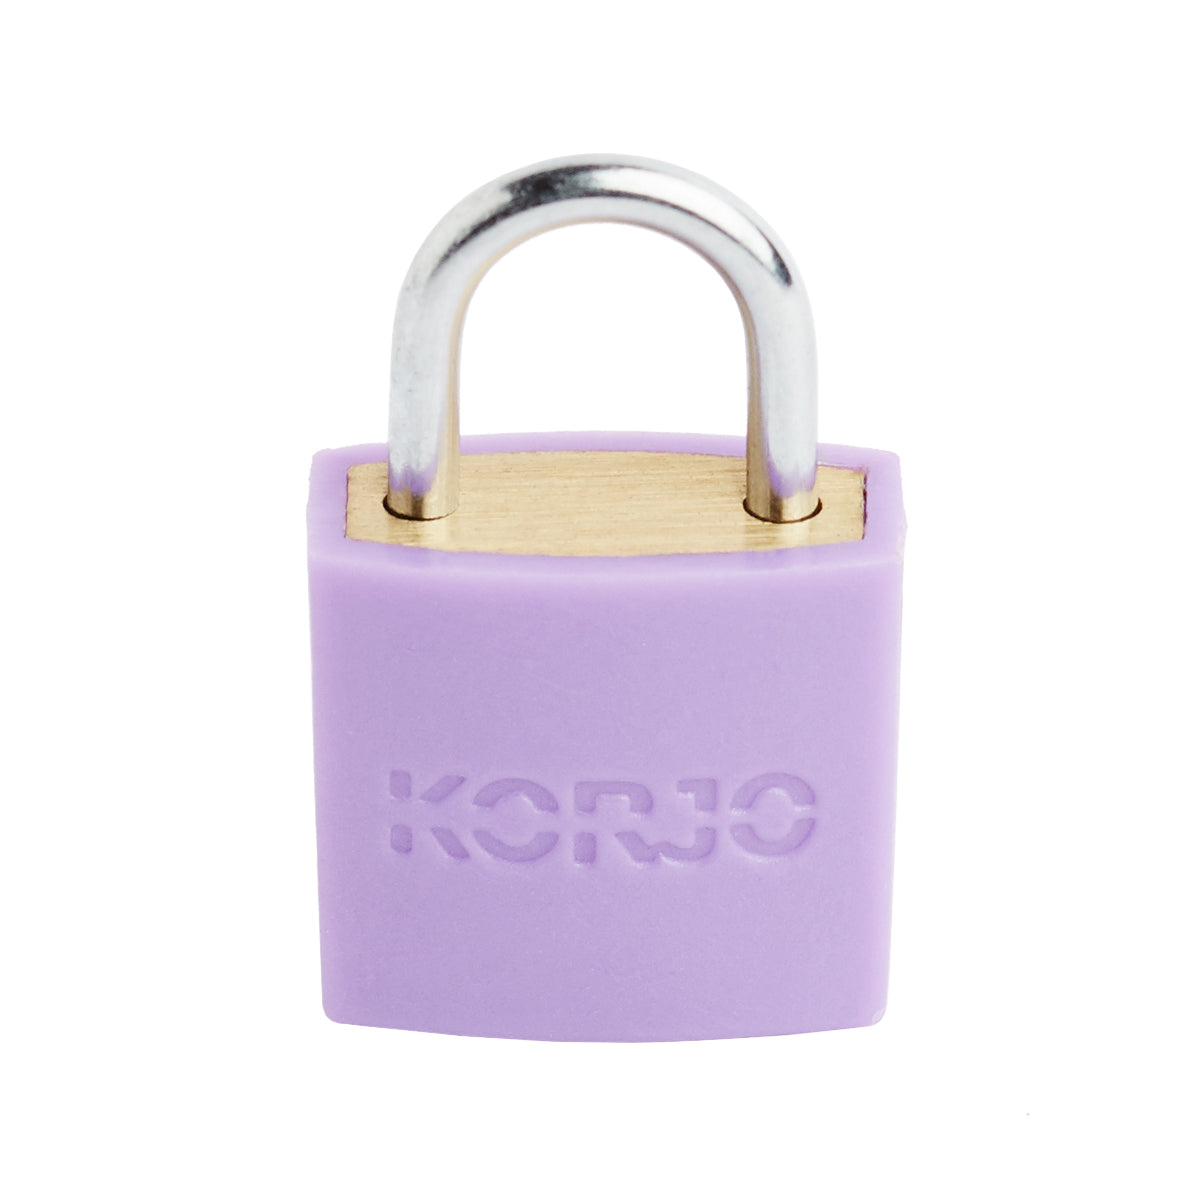 Korjo Coloured Luggage Locks